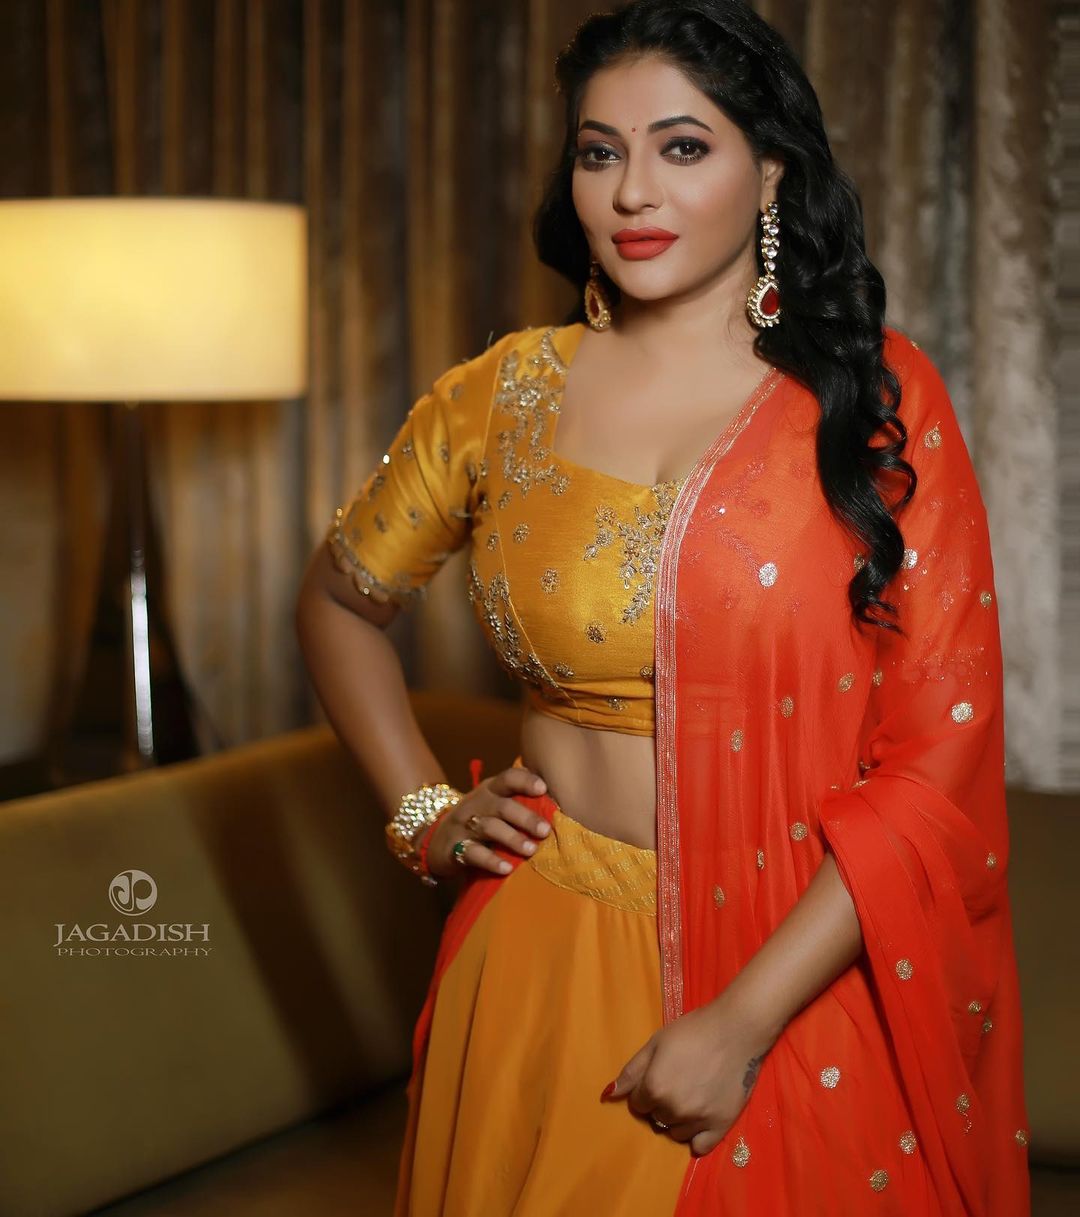 Reshma pasupuleti hot photos and video special for vijay awards